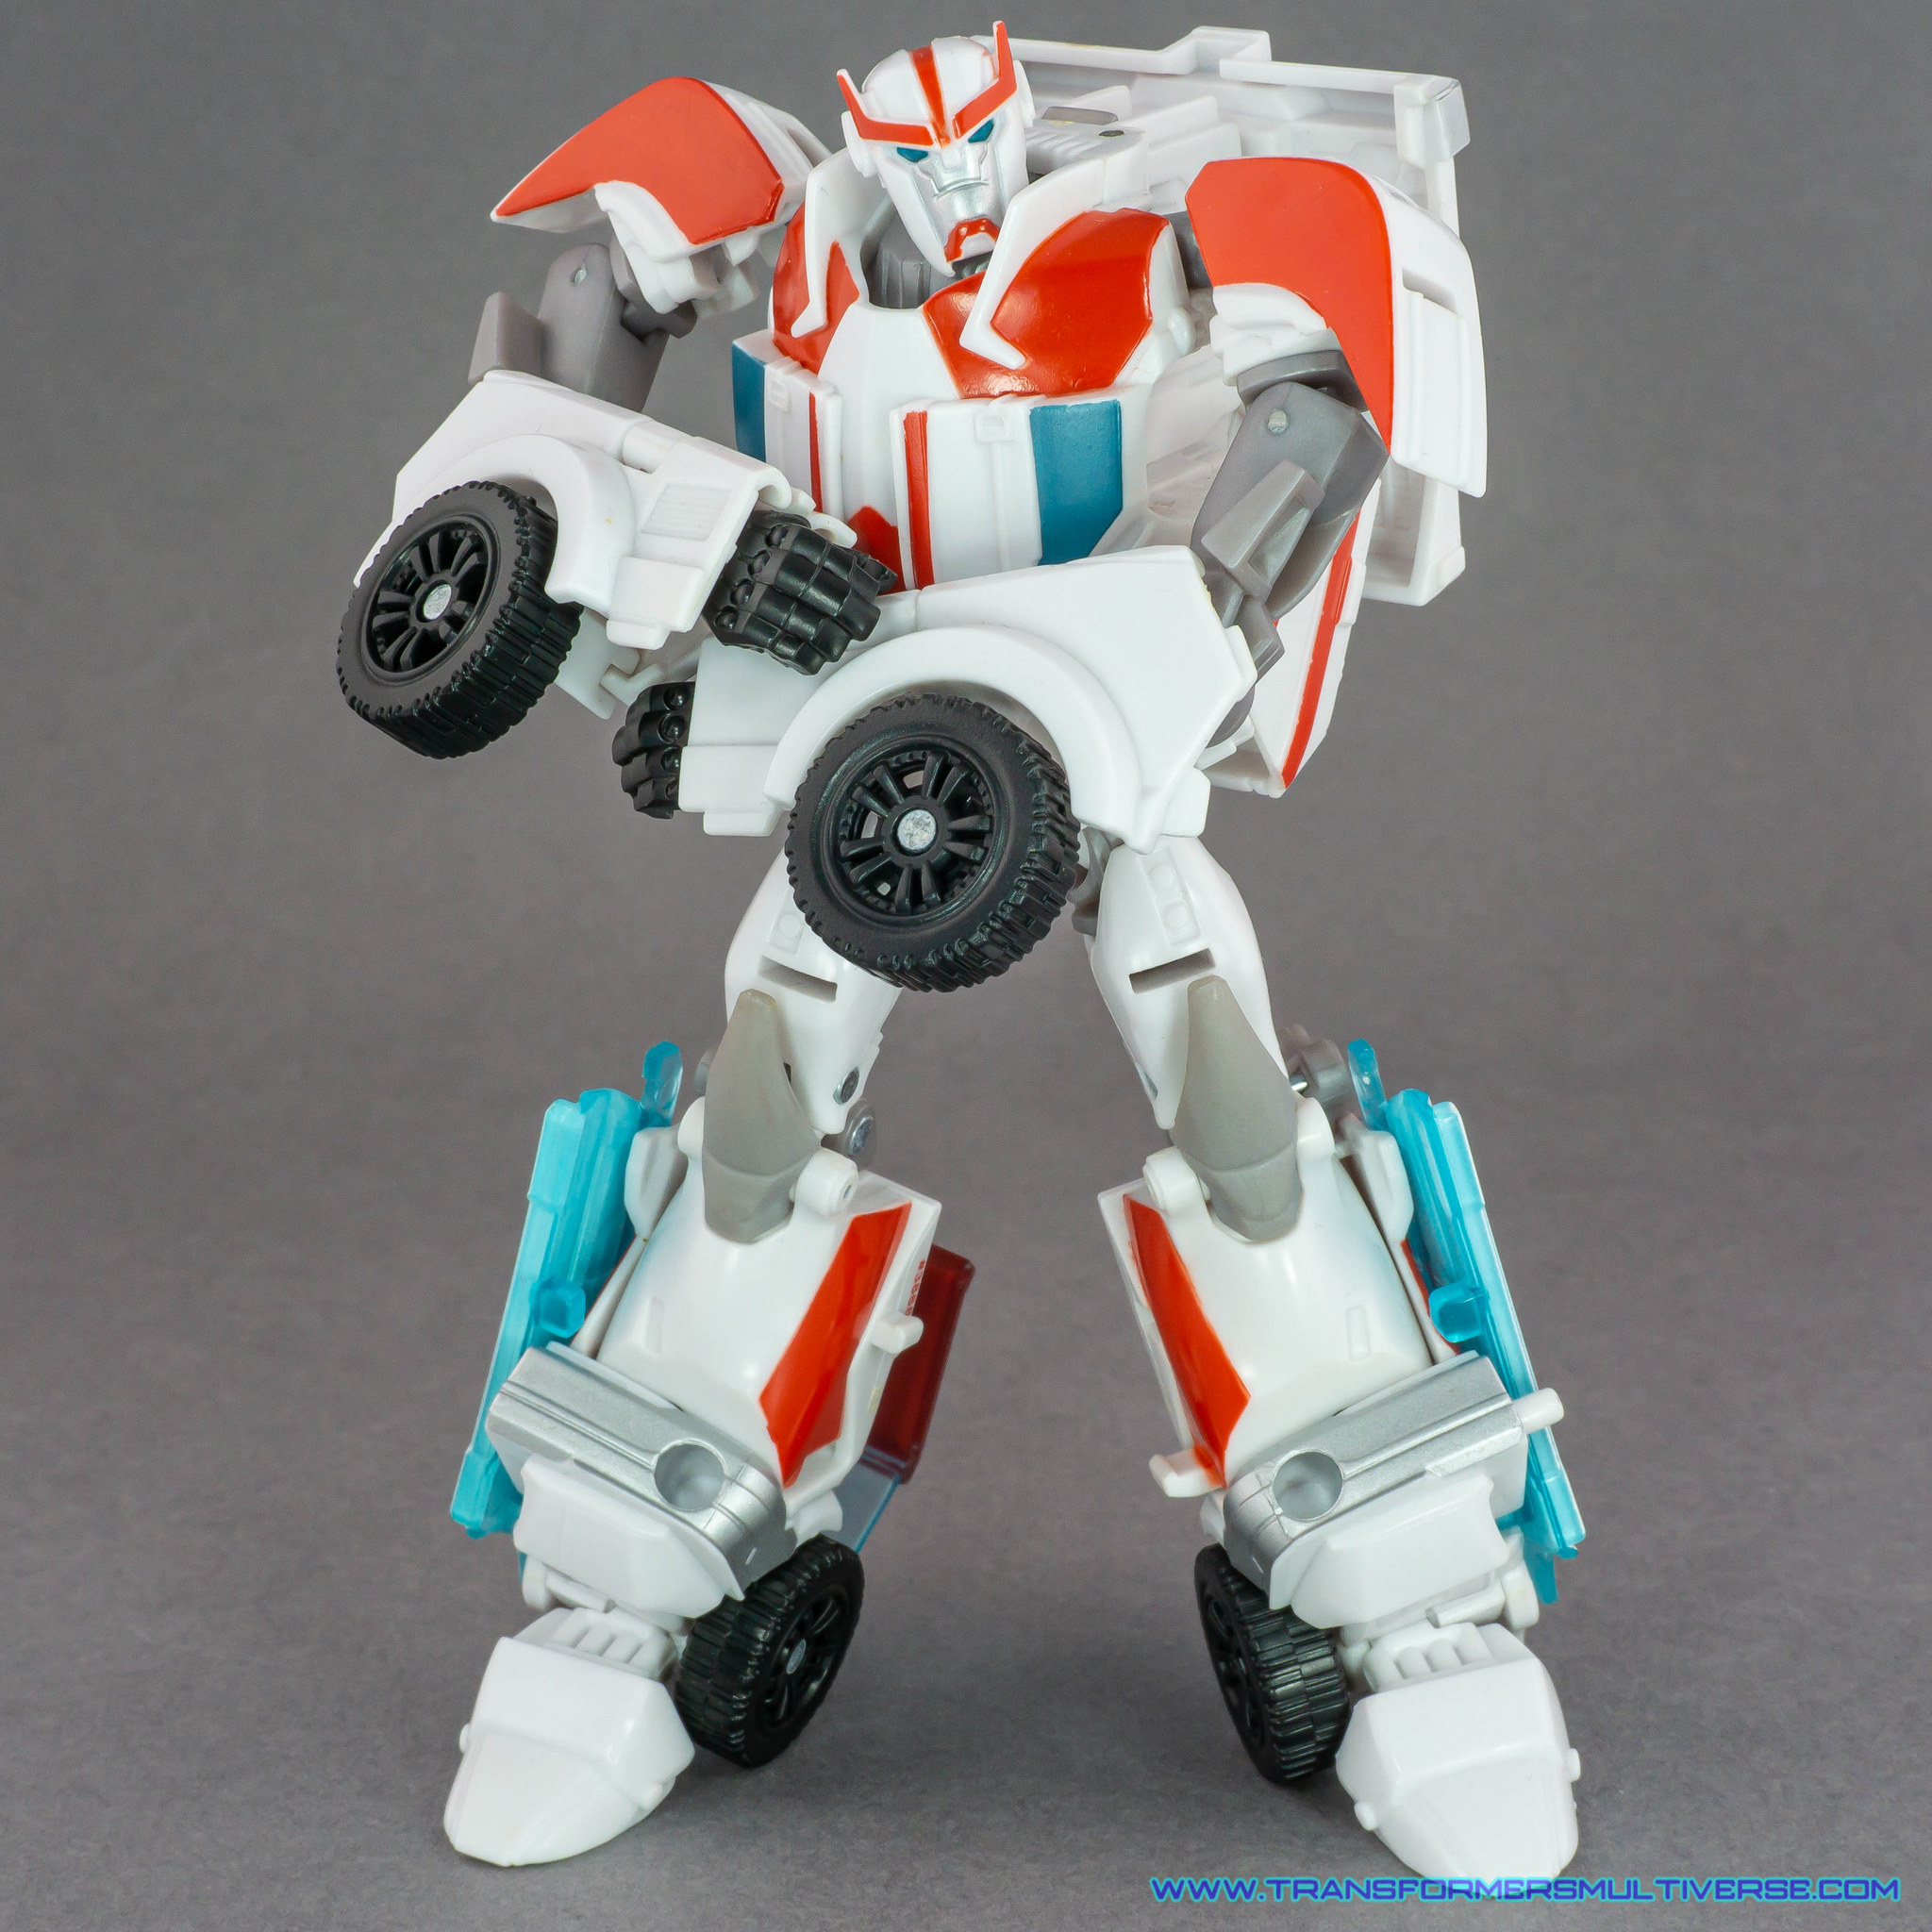 Transformers Prime Ratchet robot mode